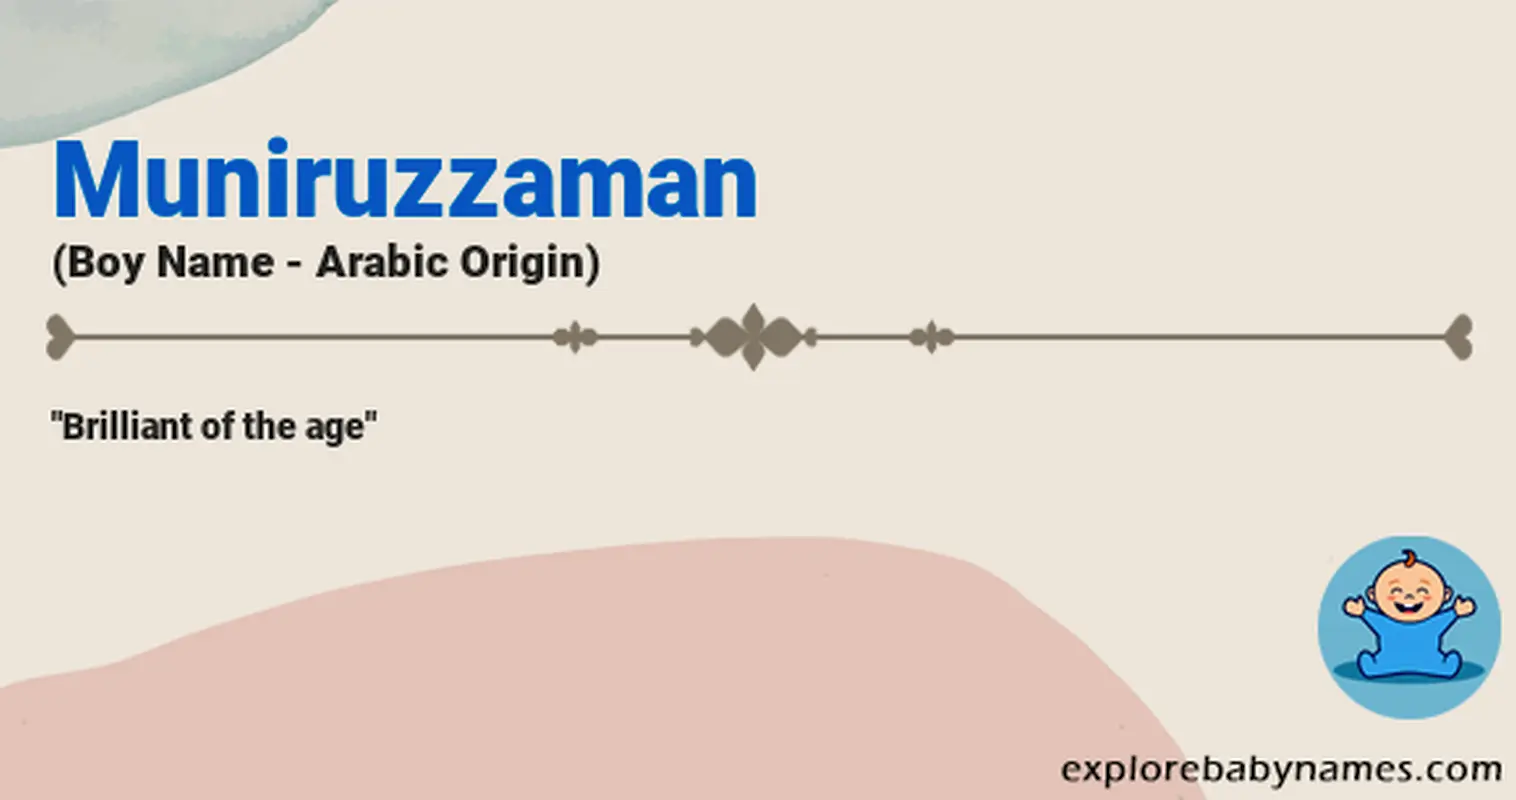 Meaning of Muniruzzaman